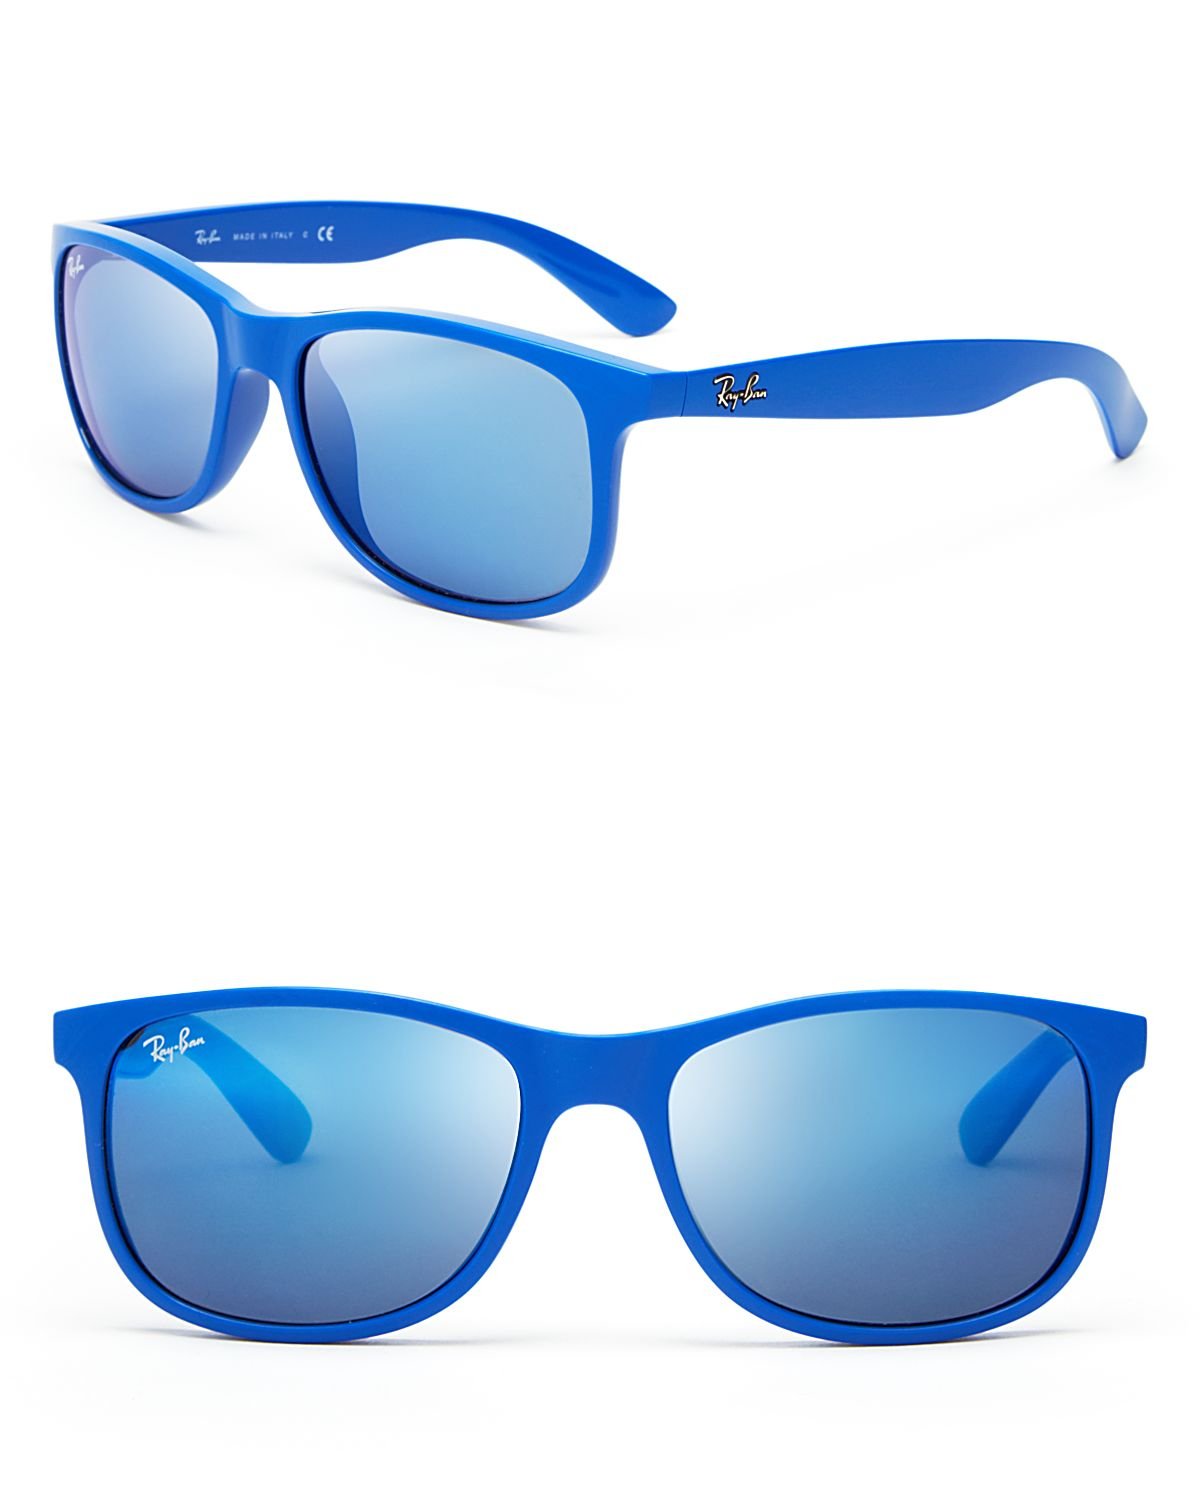 Ray-Ban Mirrored Wayfarer Sunglasses in Blue - Lyst